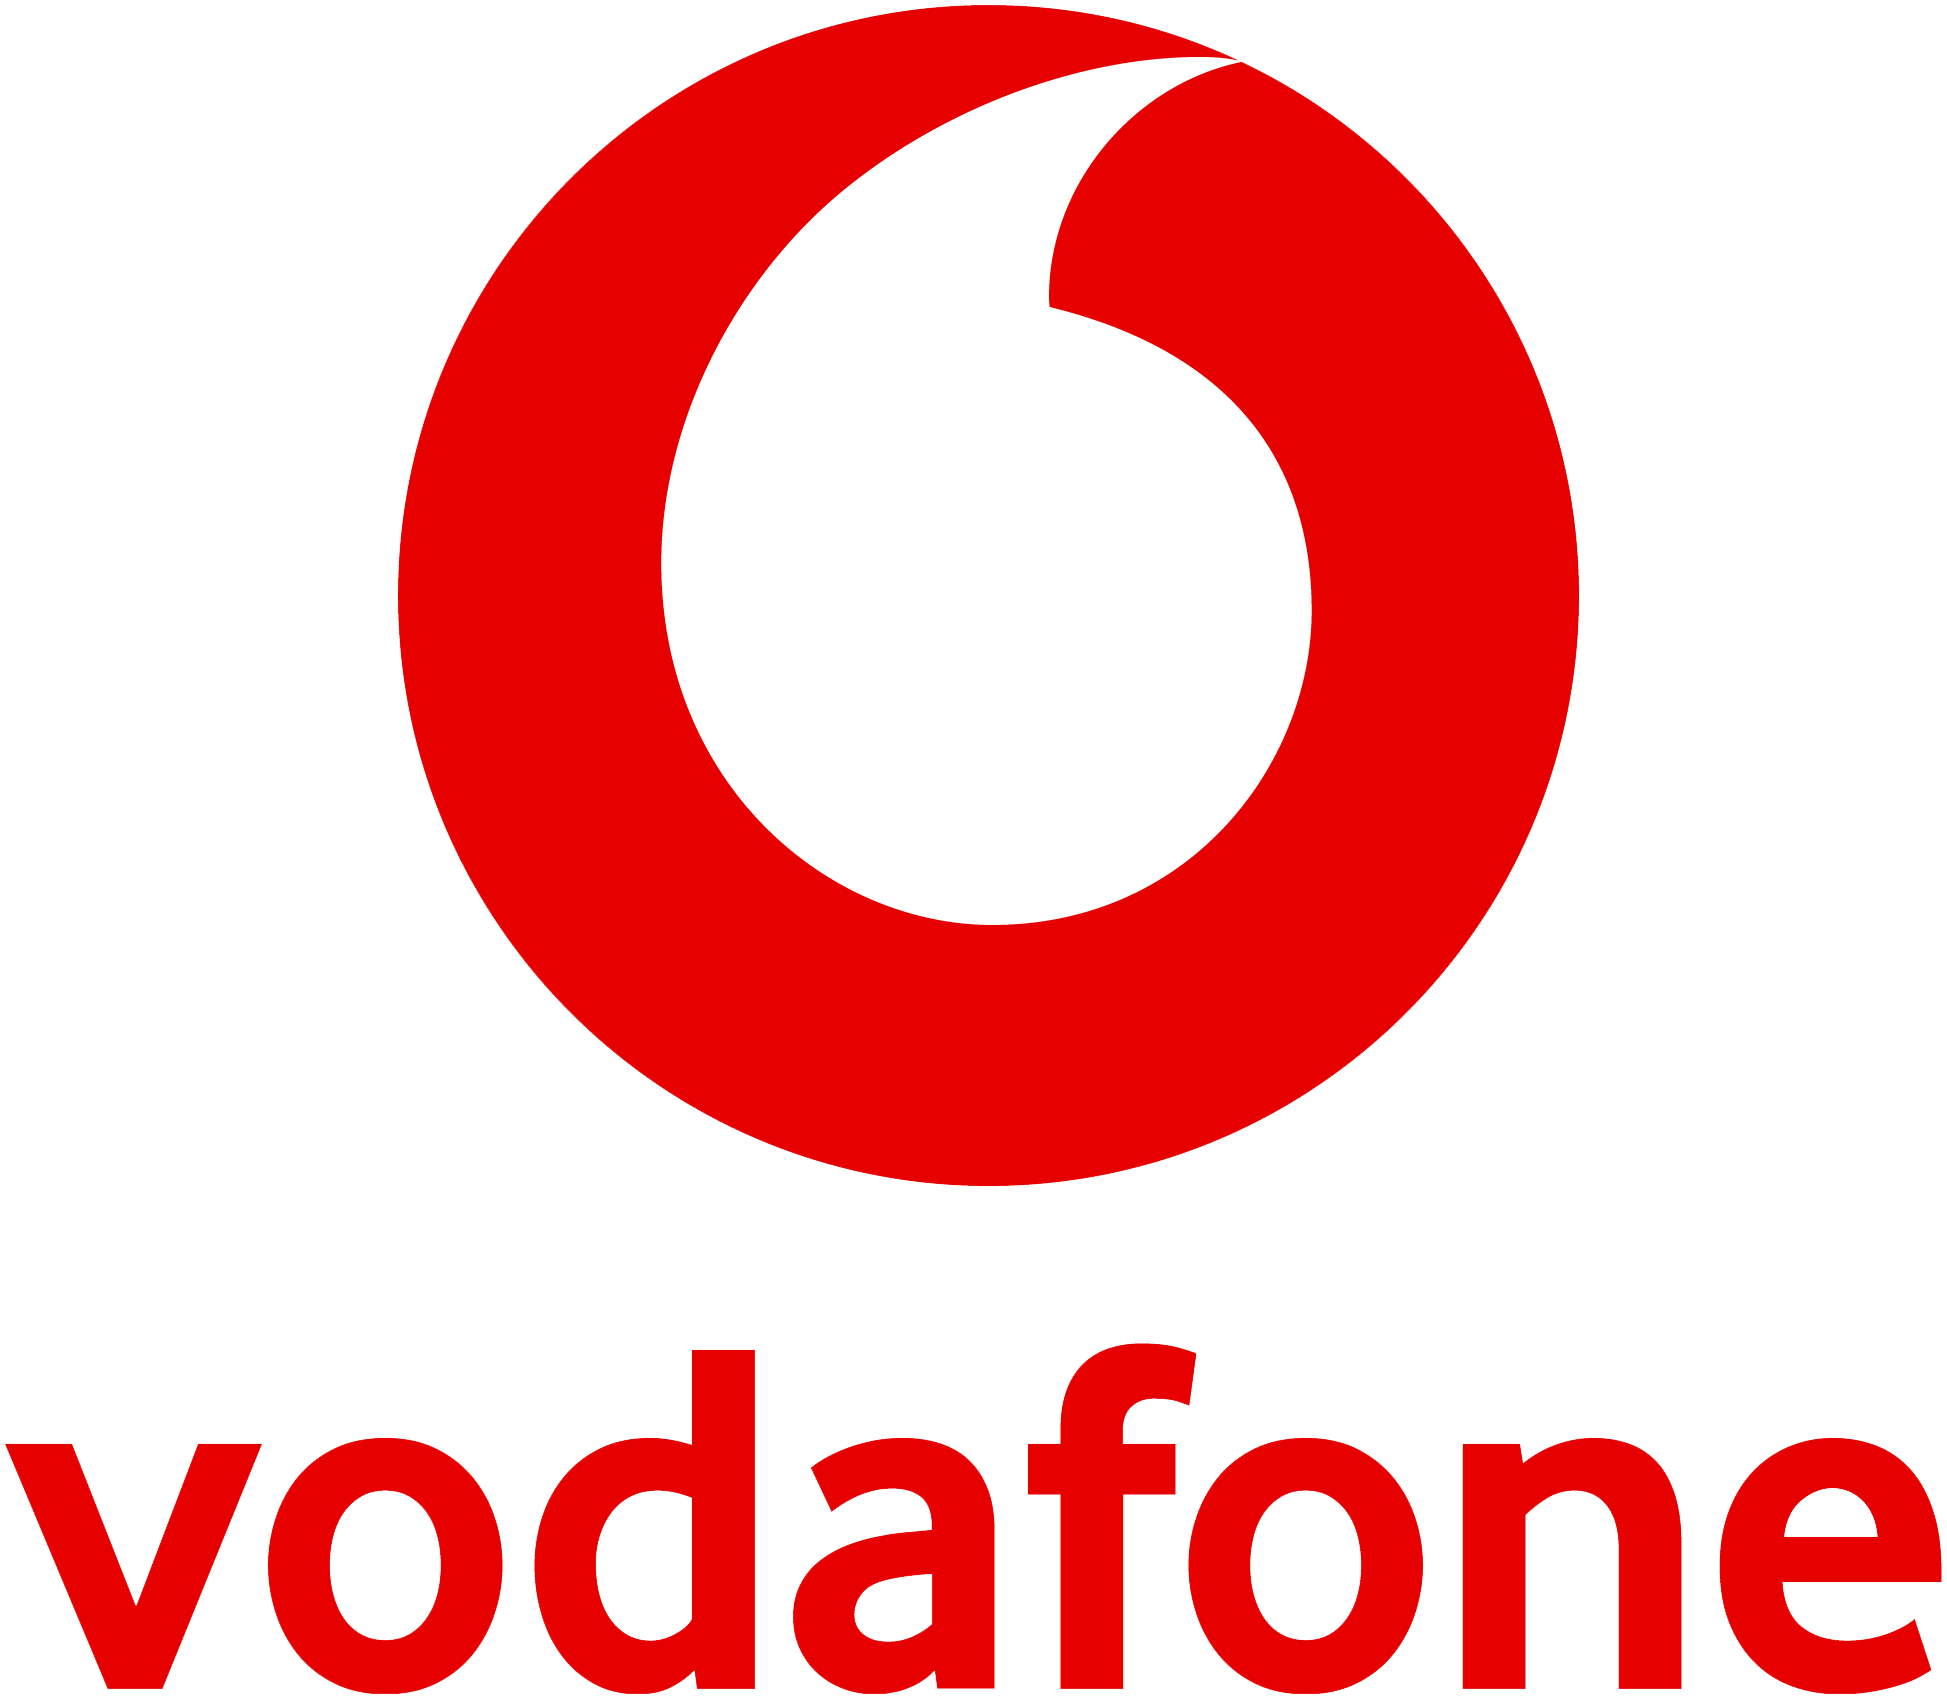 Vodafone Spain - Optiva Media's VR customer